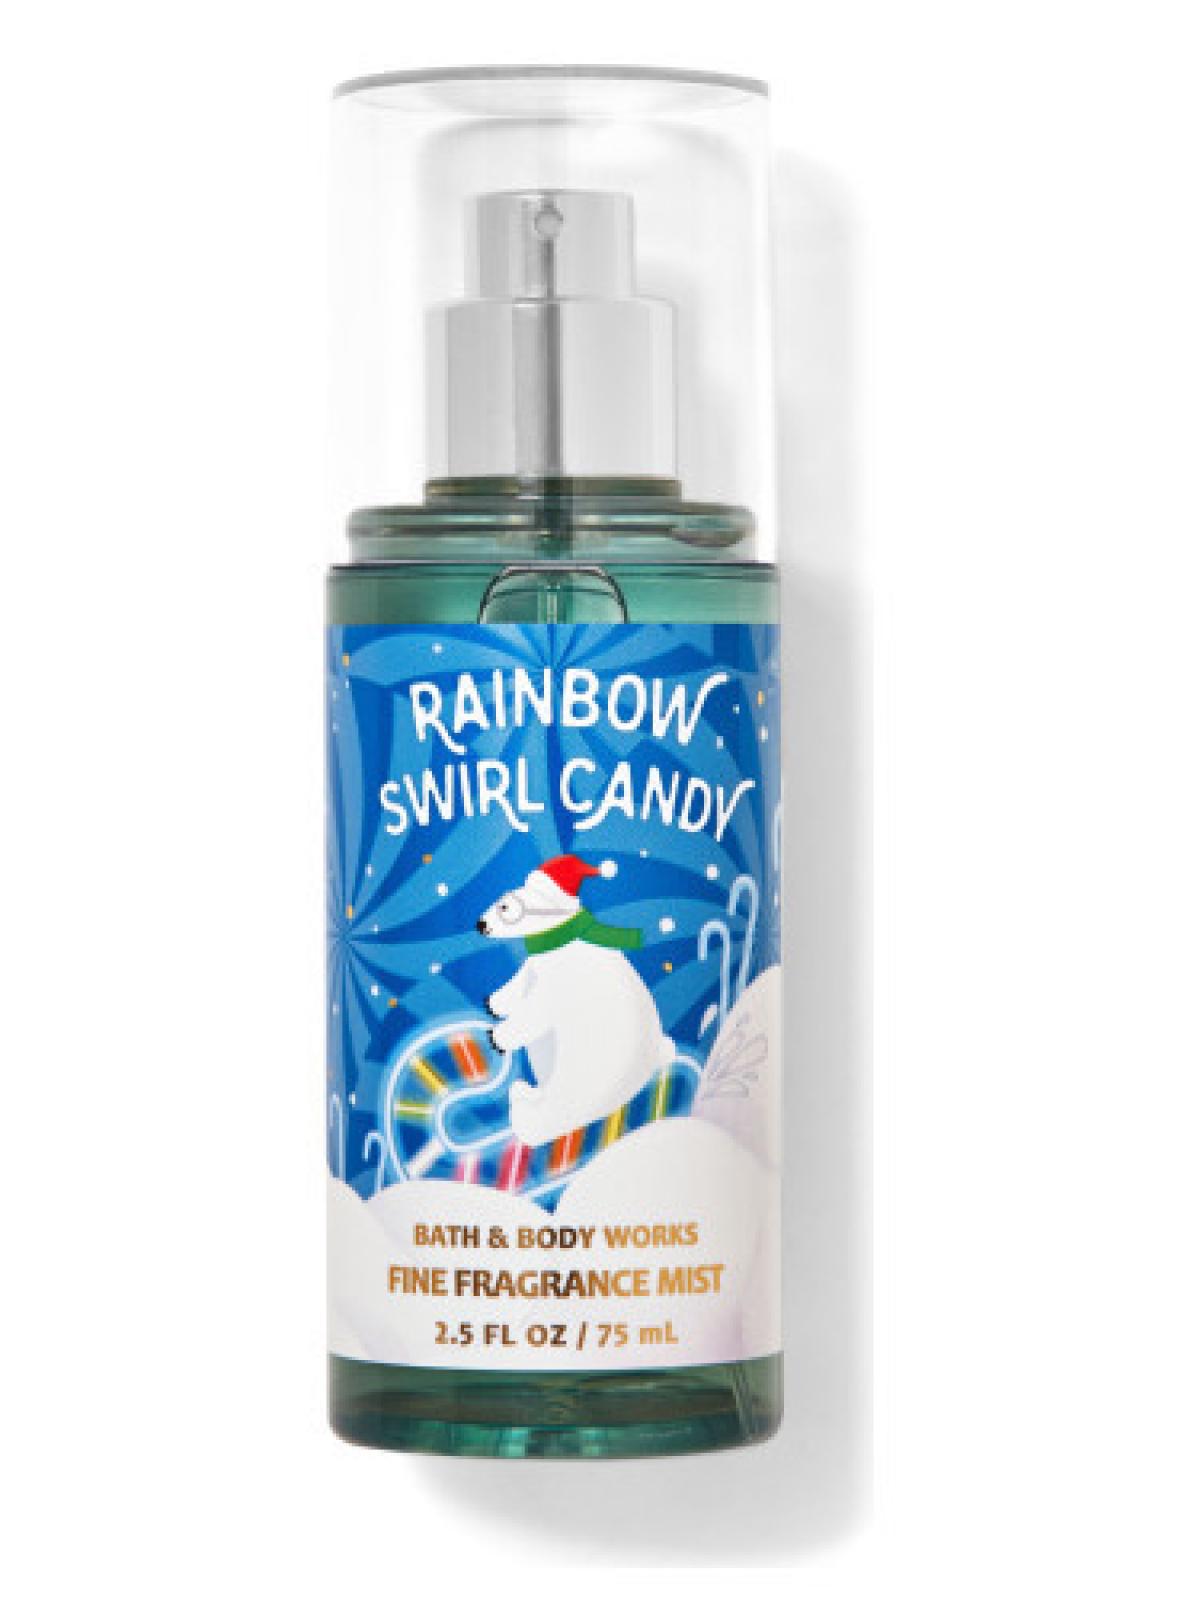 Bath and body works rainbow swirl candy